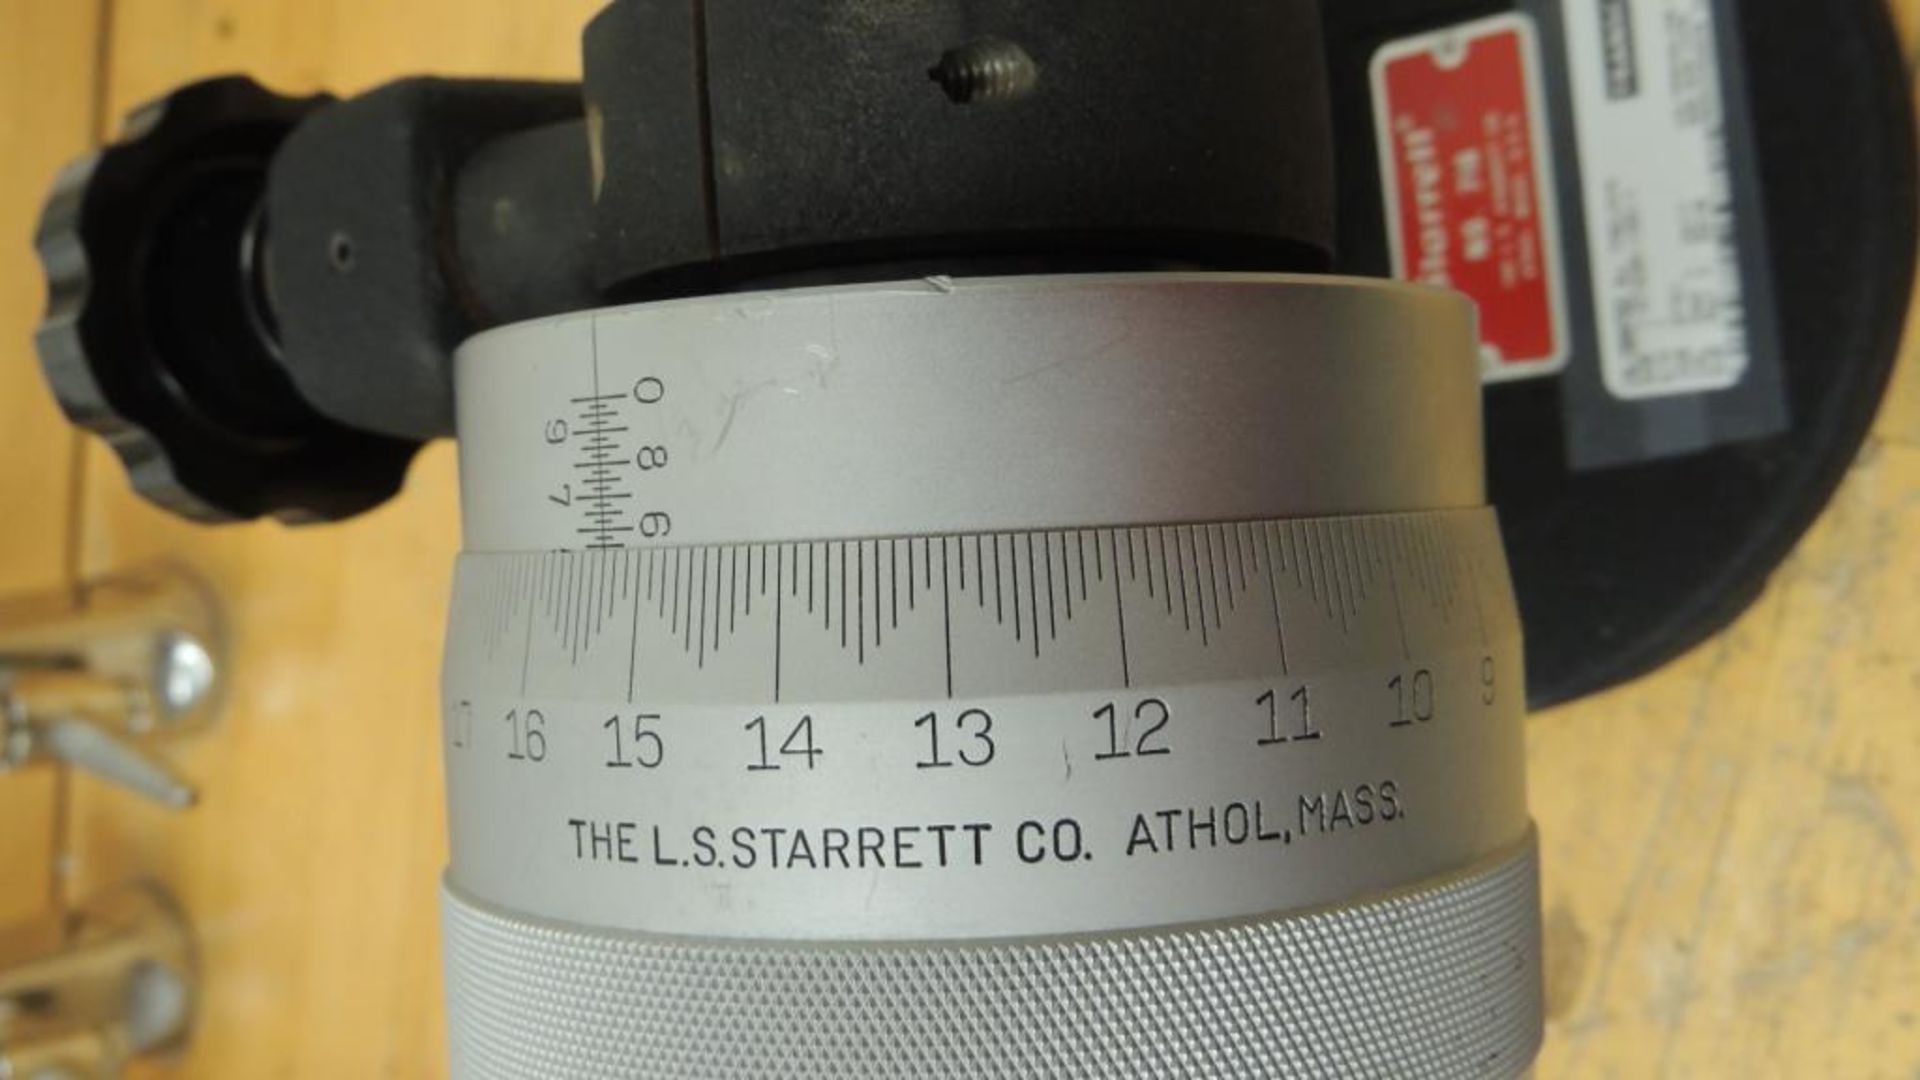 Starrett 716 Dial Indicator Tester; Dial Indicator Tester - Metrology Calibration Micrometer Head. - Image 5 of 6